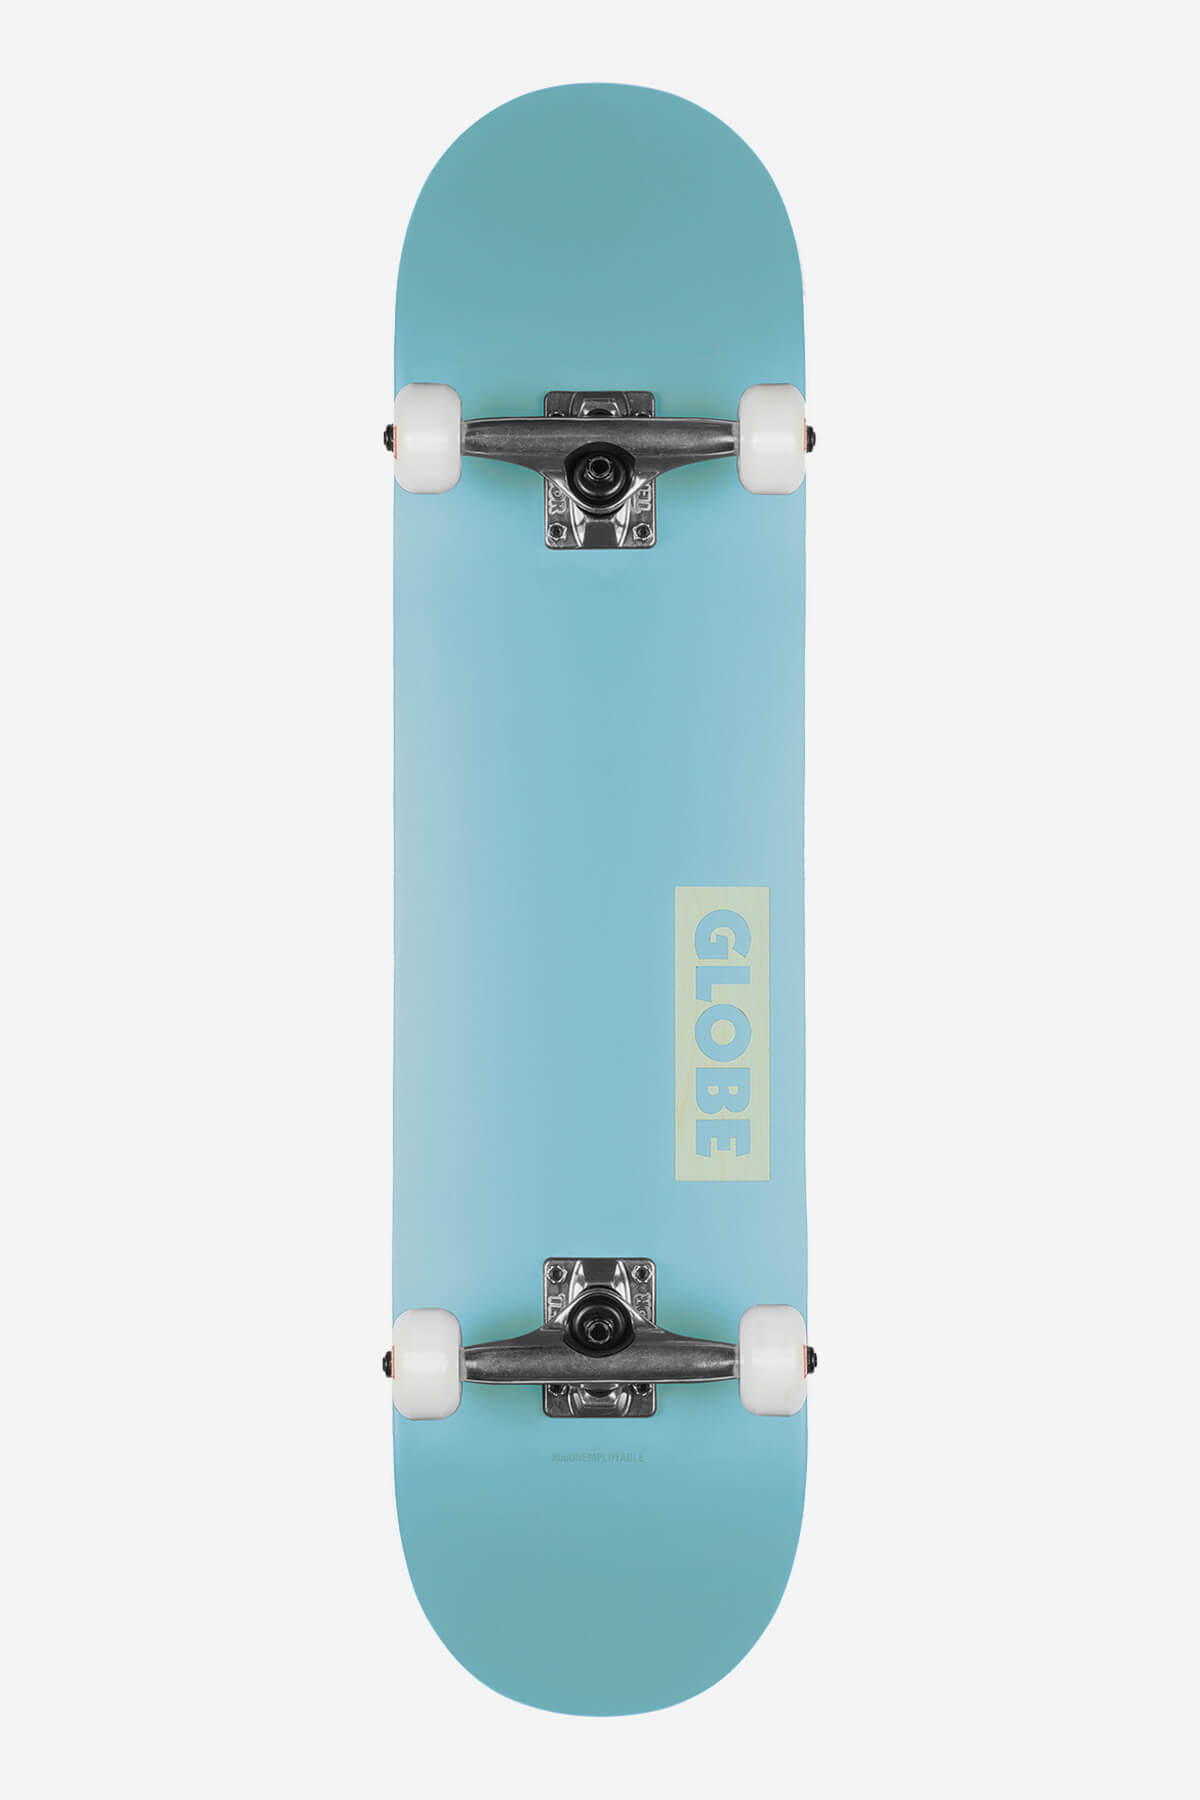 Globe Skateboard completen Goodstock 8.75" Complete Skateboard in staal Blue